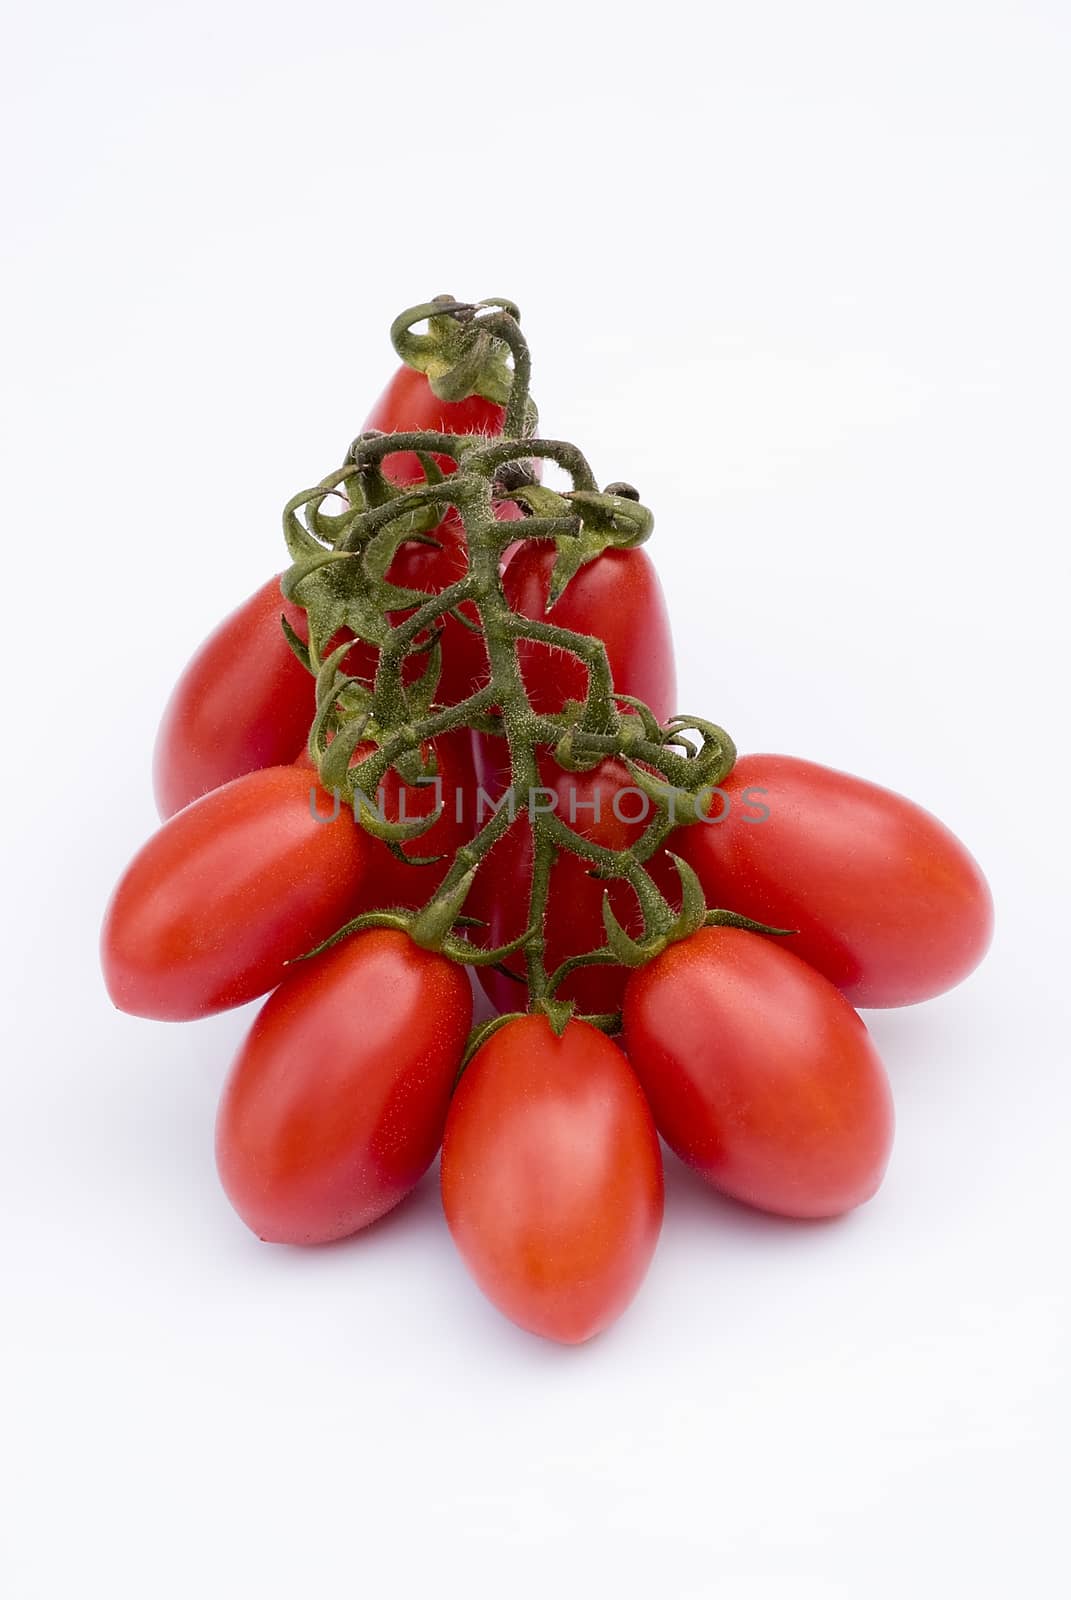 Cherry Tomato on white background by vainillaychile